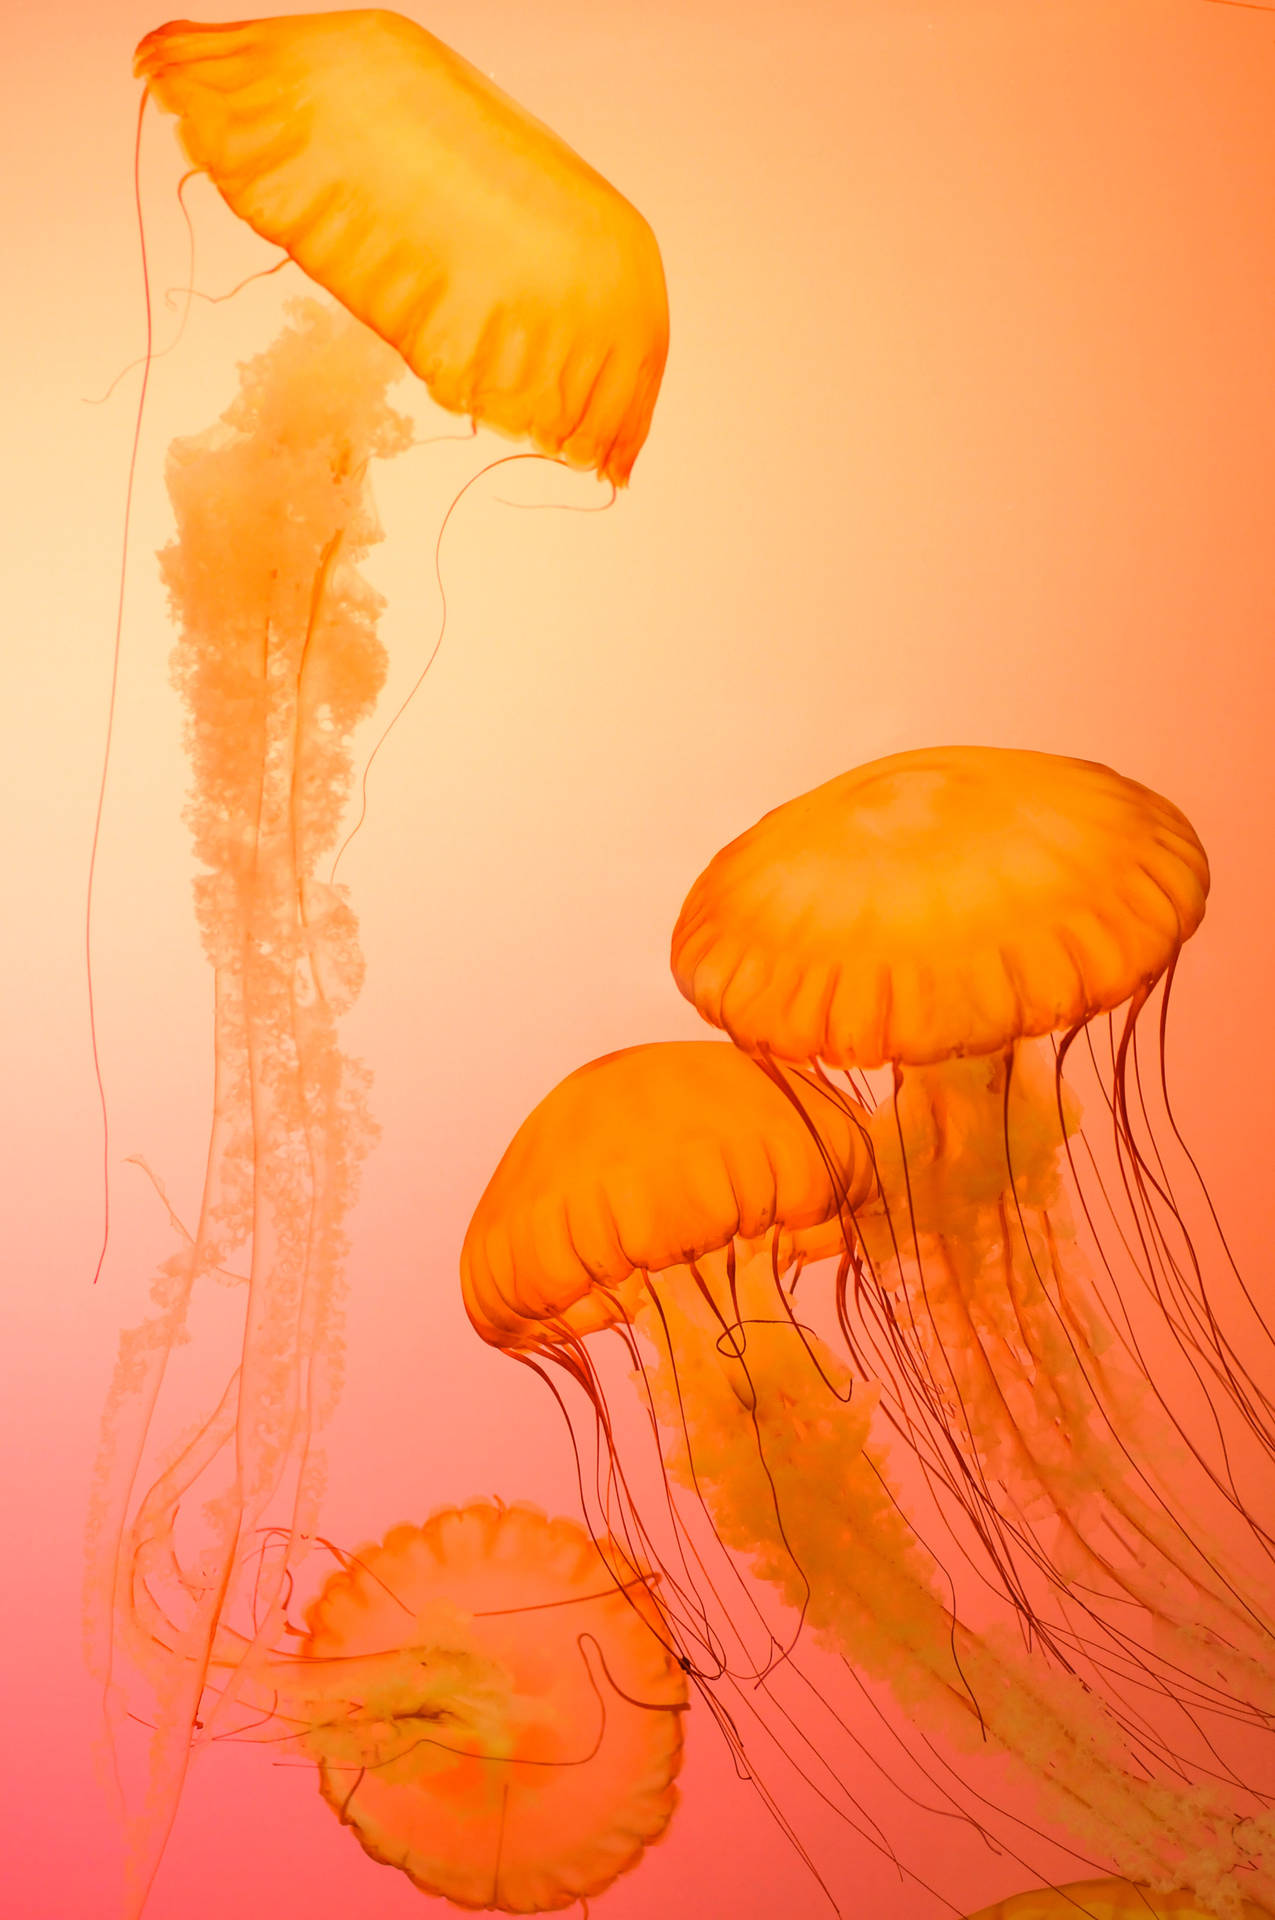 4k IPhone Orange Jellyfish Wallpaper